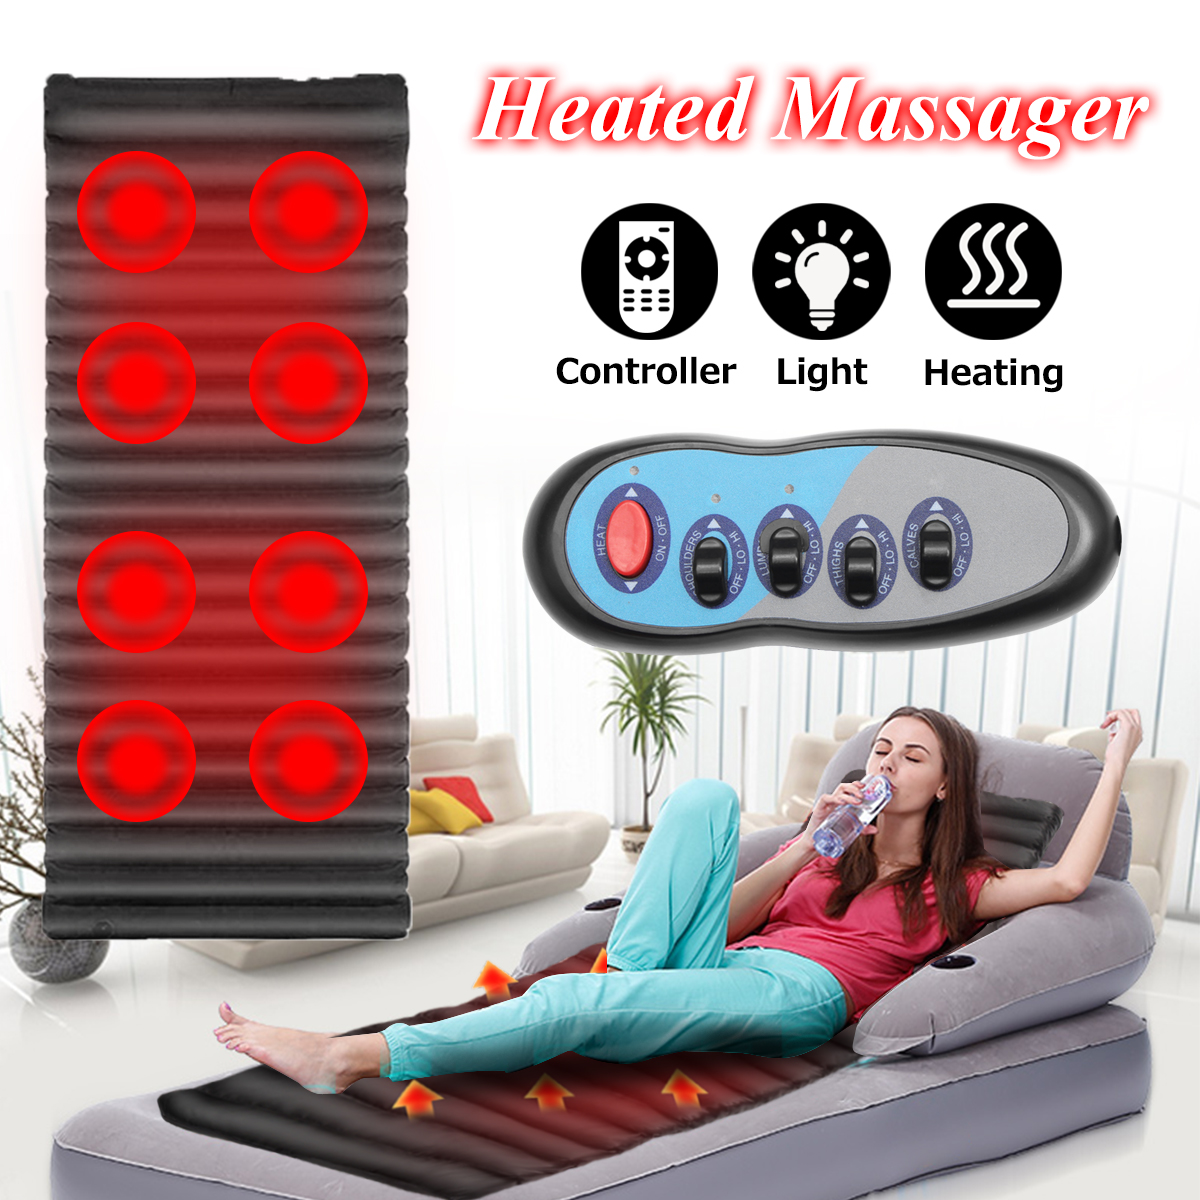 Body Massage Mattress Heated Massager Full Body Cushion Sofa